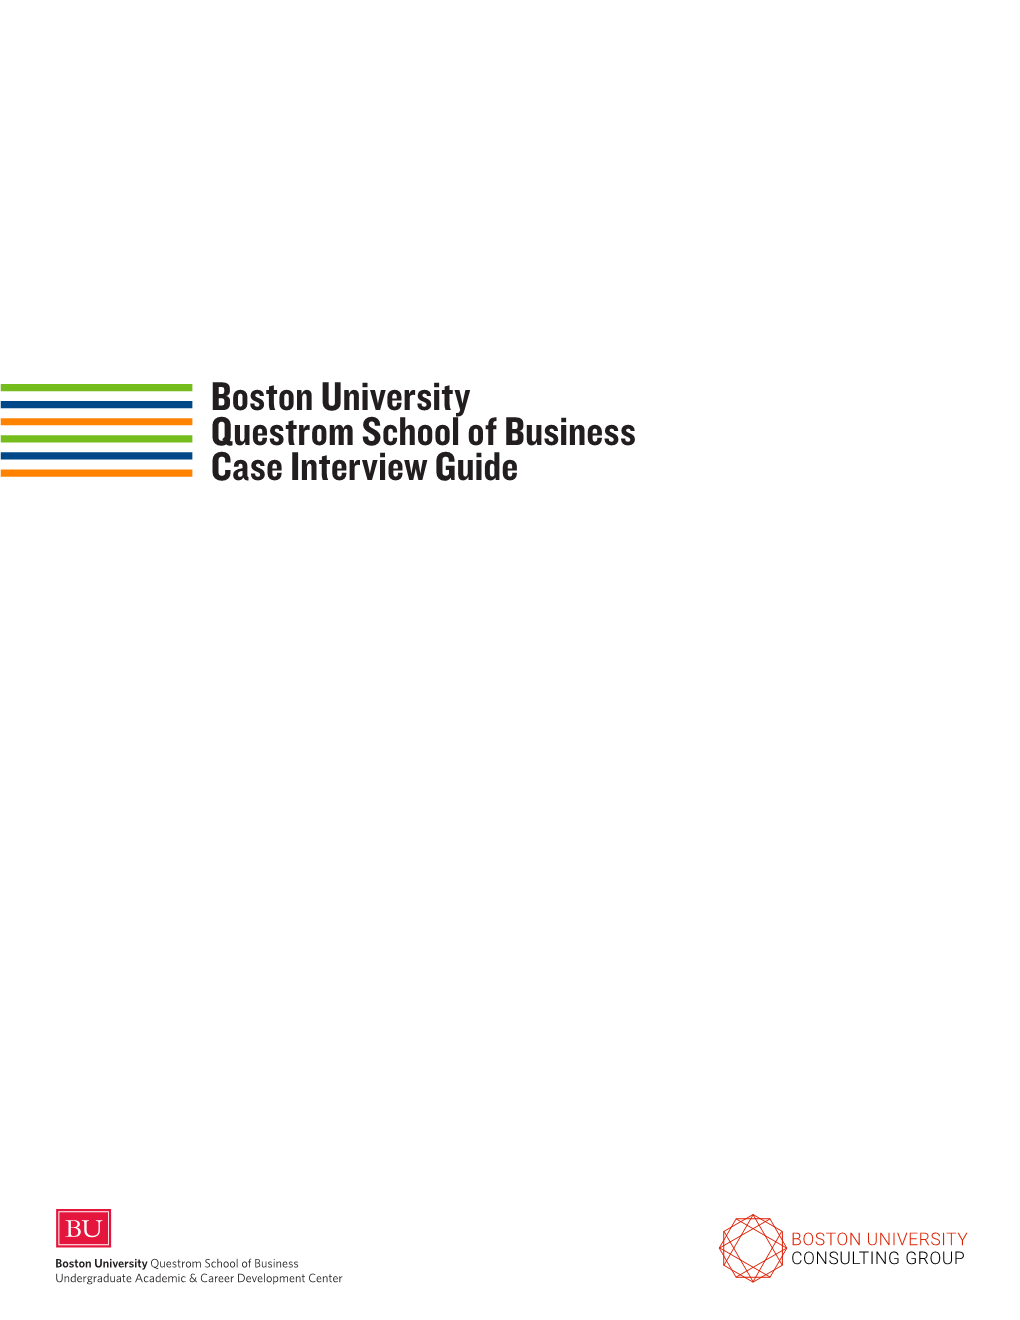 Boston University Questrom School of Business Case Interview Guide